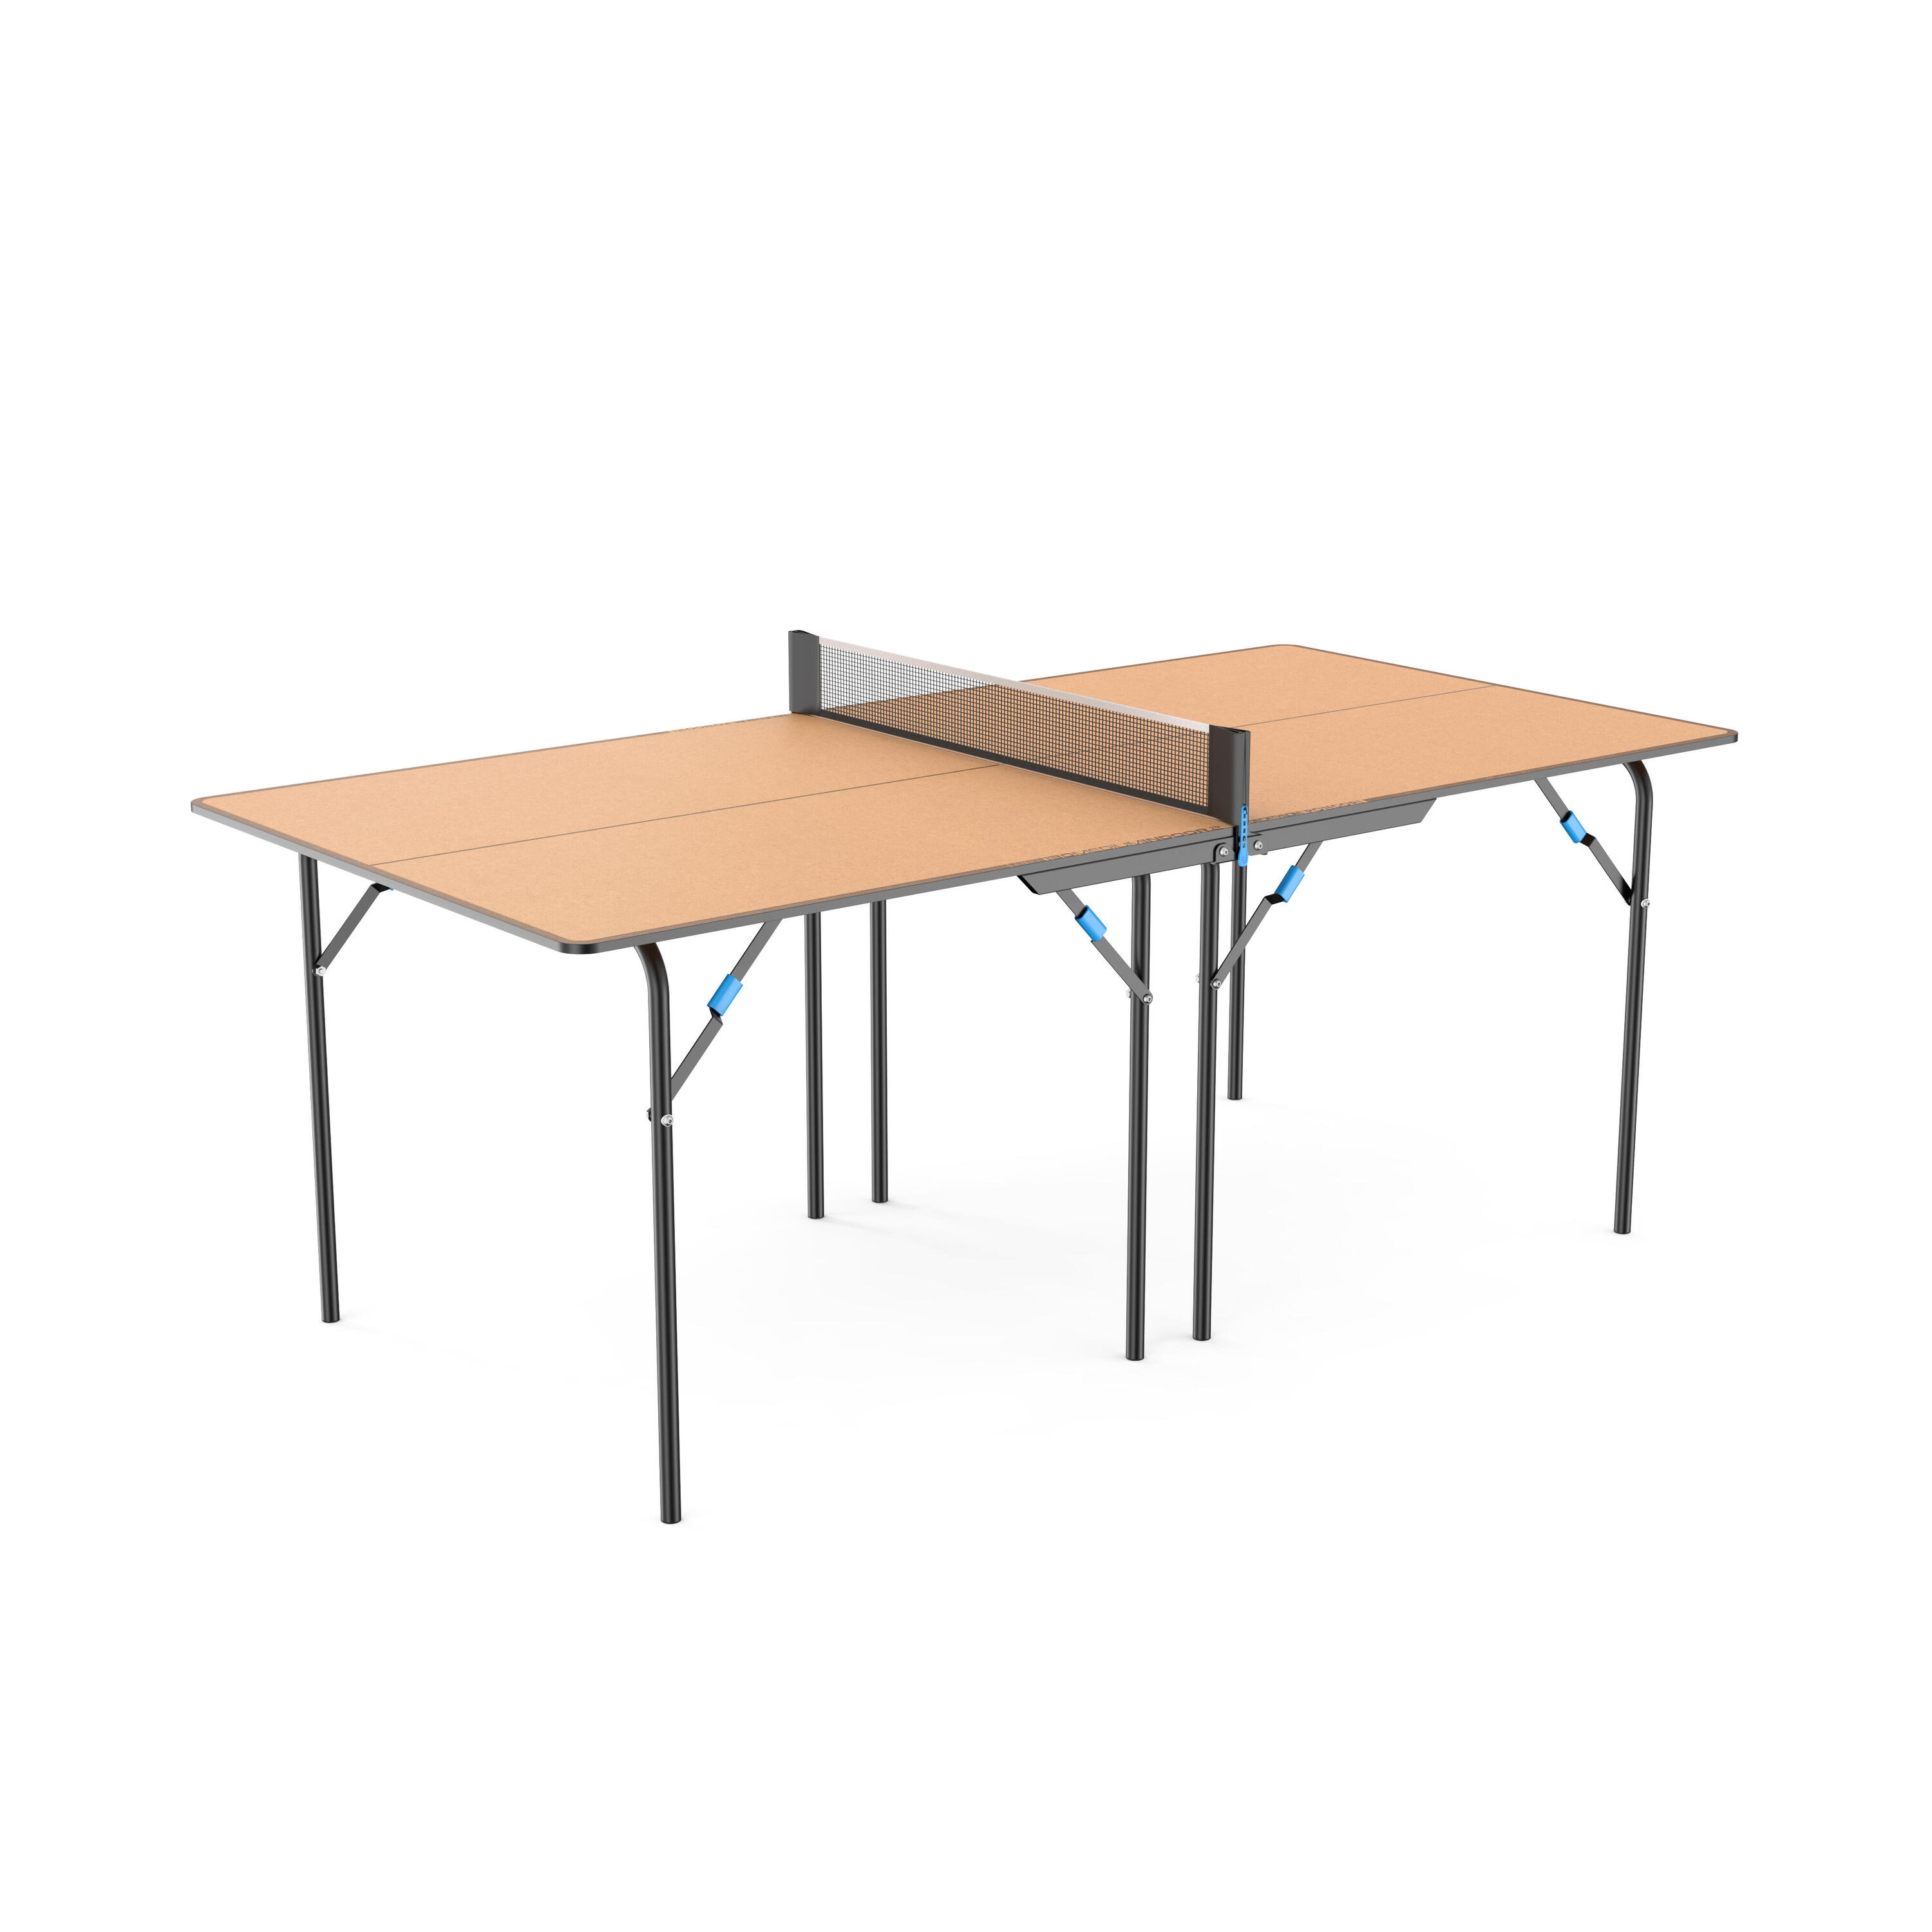 Small/Medium Table Tennis Tables